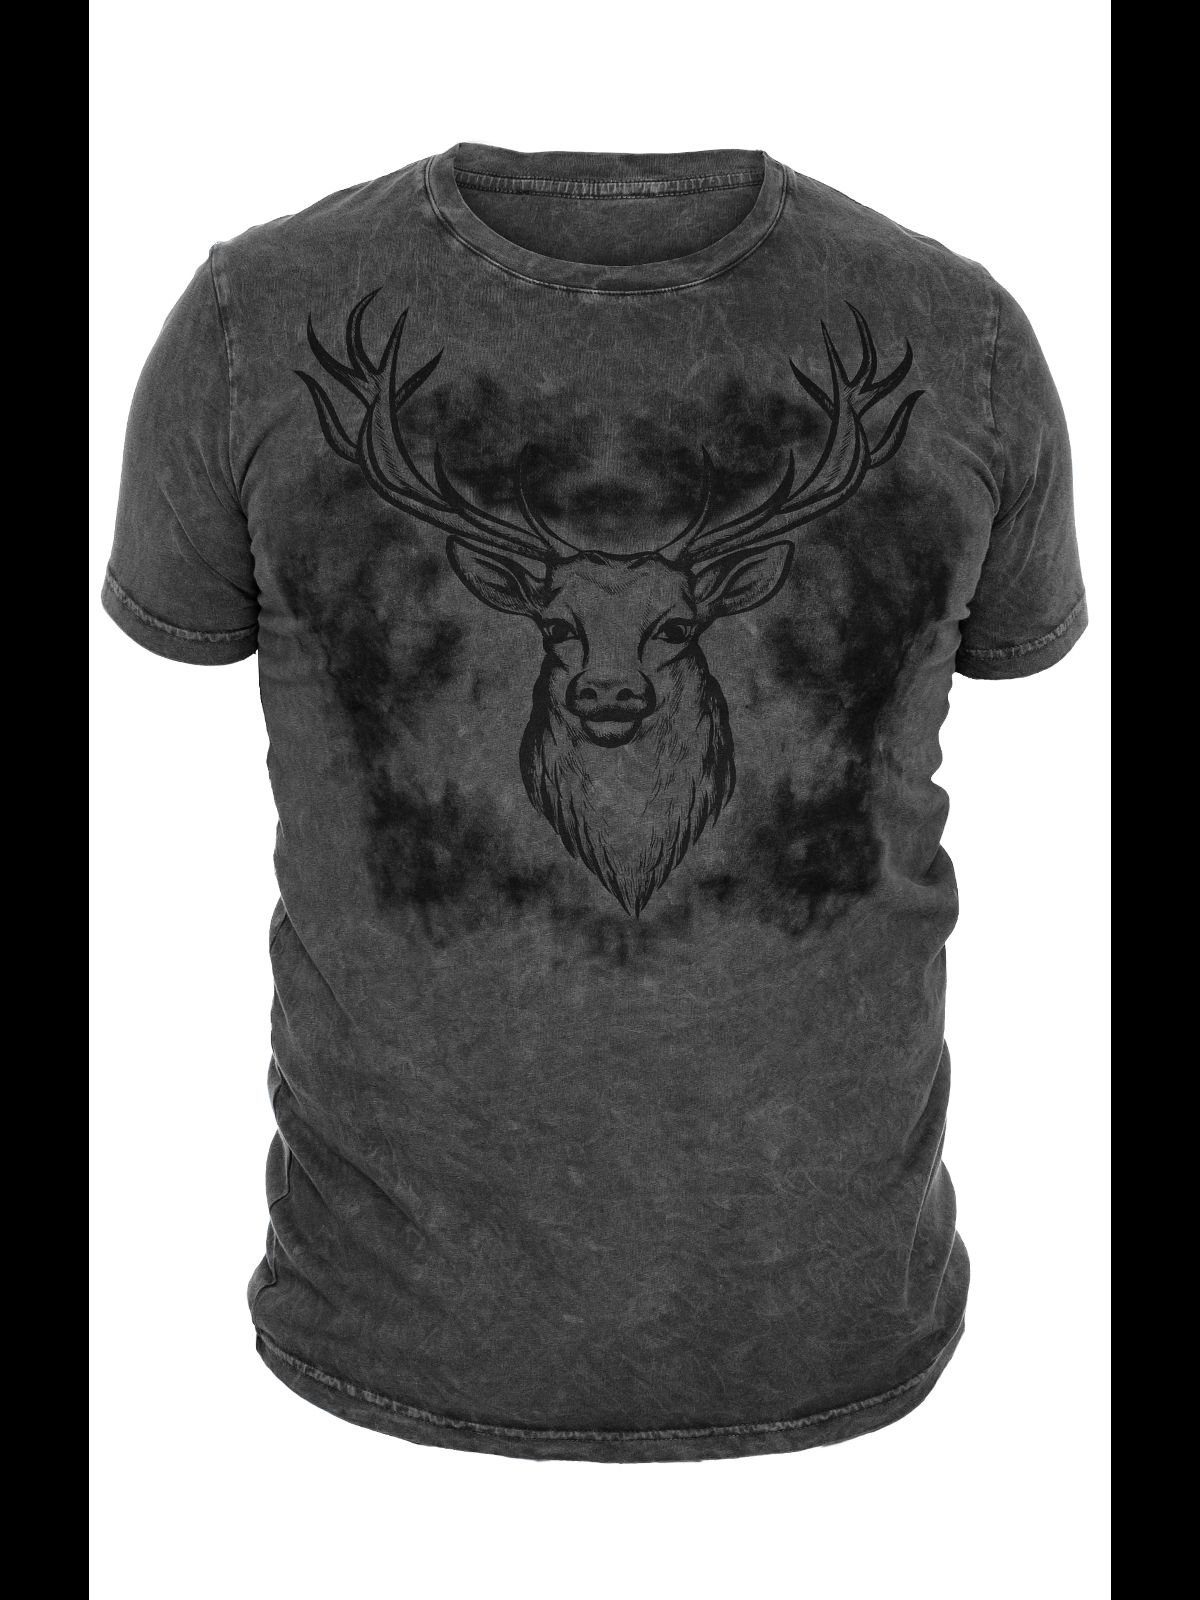 CO T-Shirt Trachtenshirt 2511 Almsach schwarz